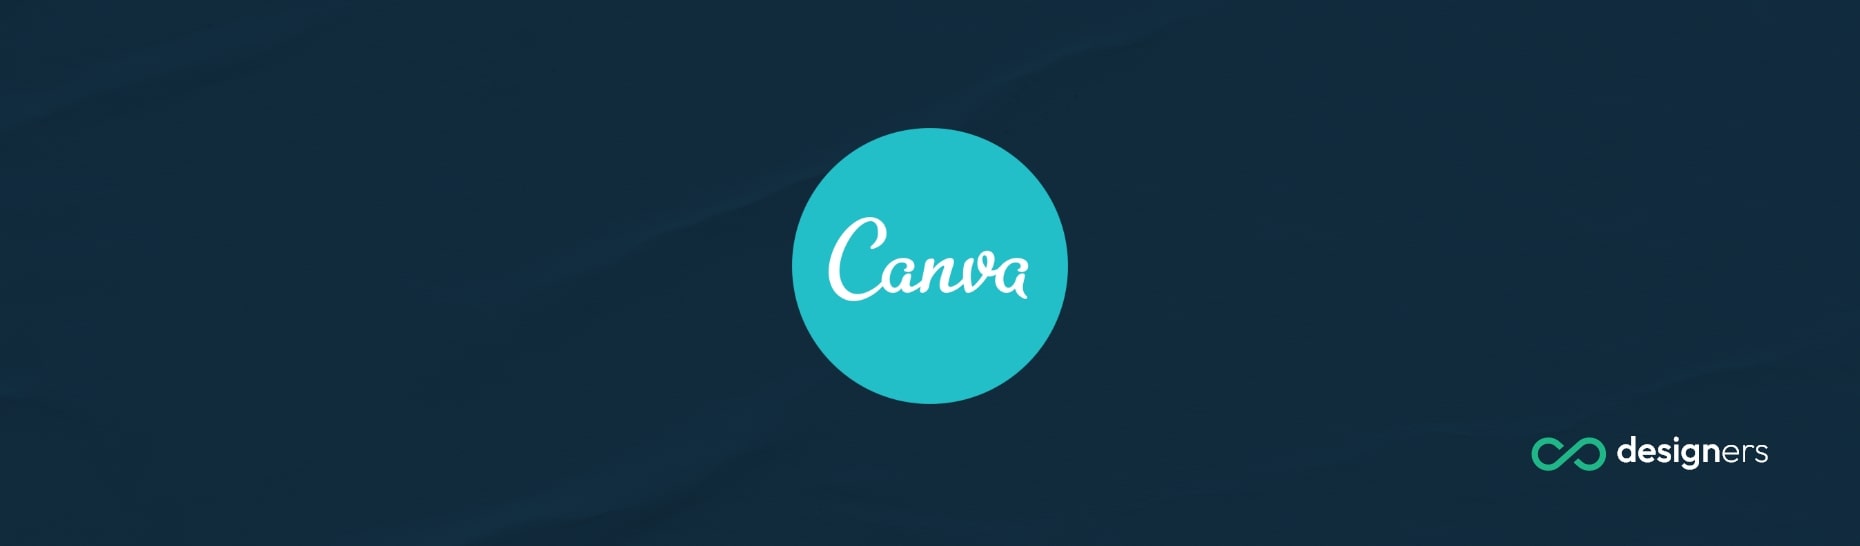 Who Creates Canva Designs?